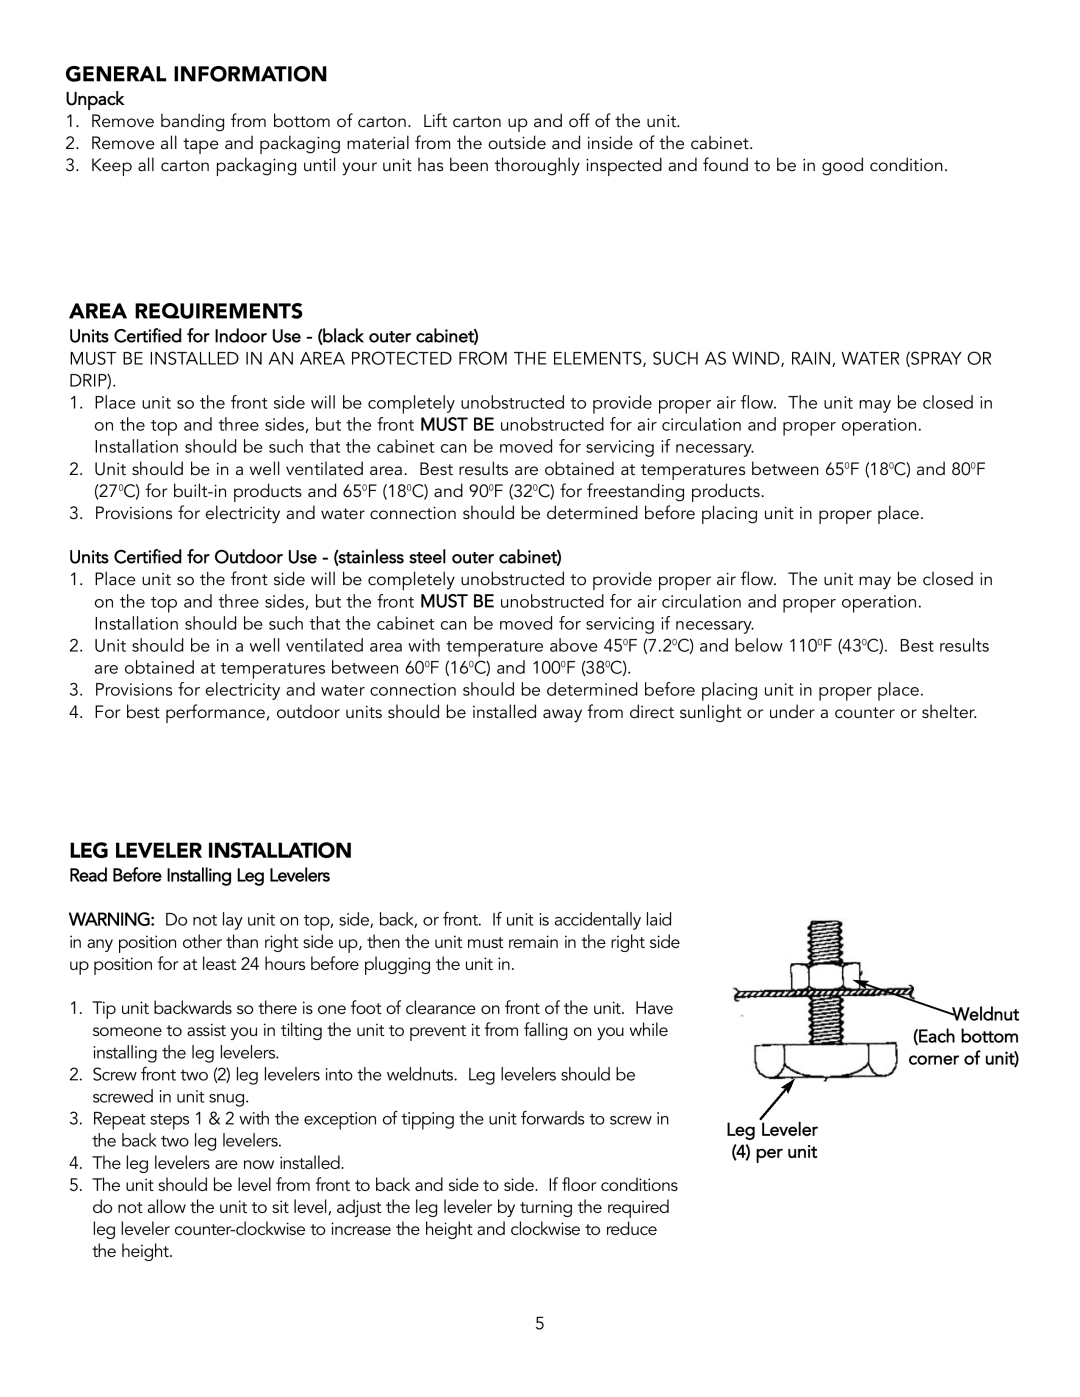 Viking Combination Beverage Center manual General Information, Area Requirements, Leg Leveler Installation 